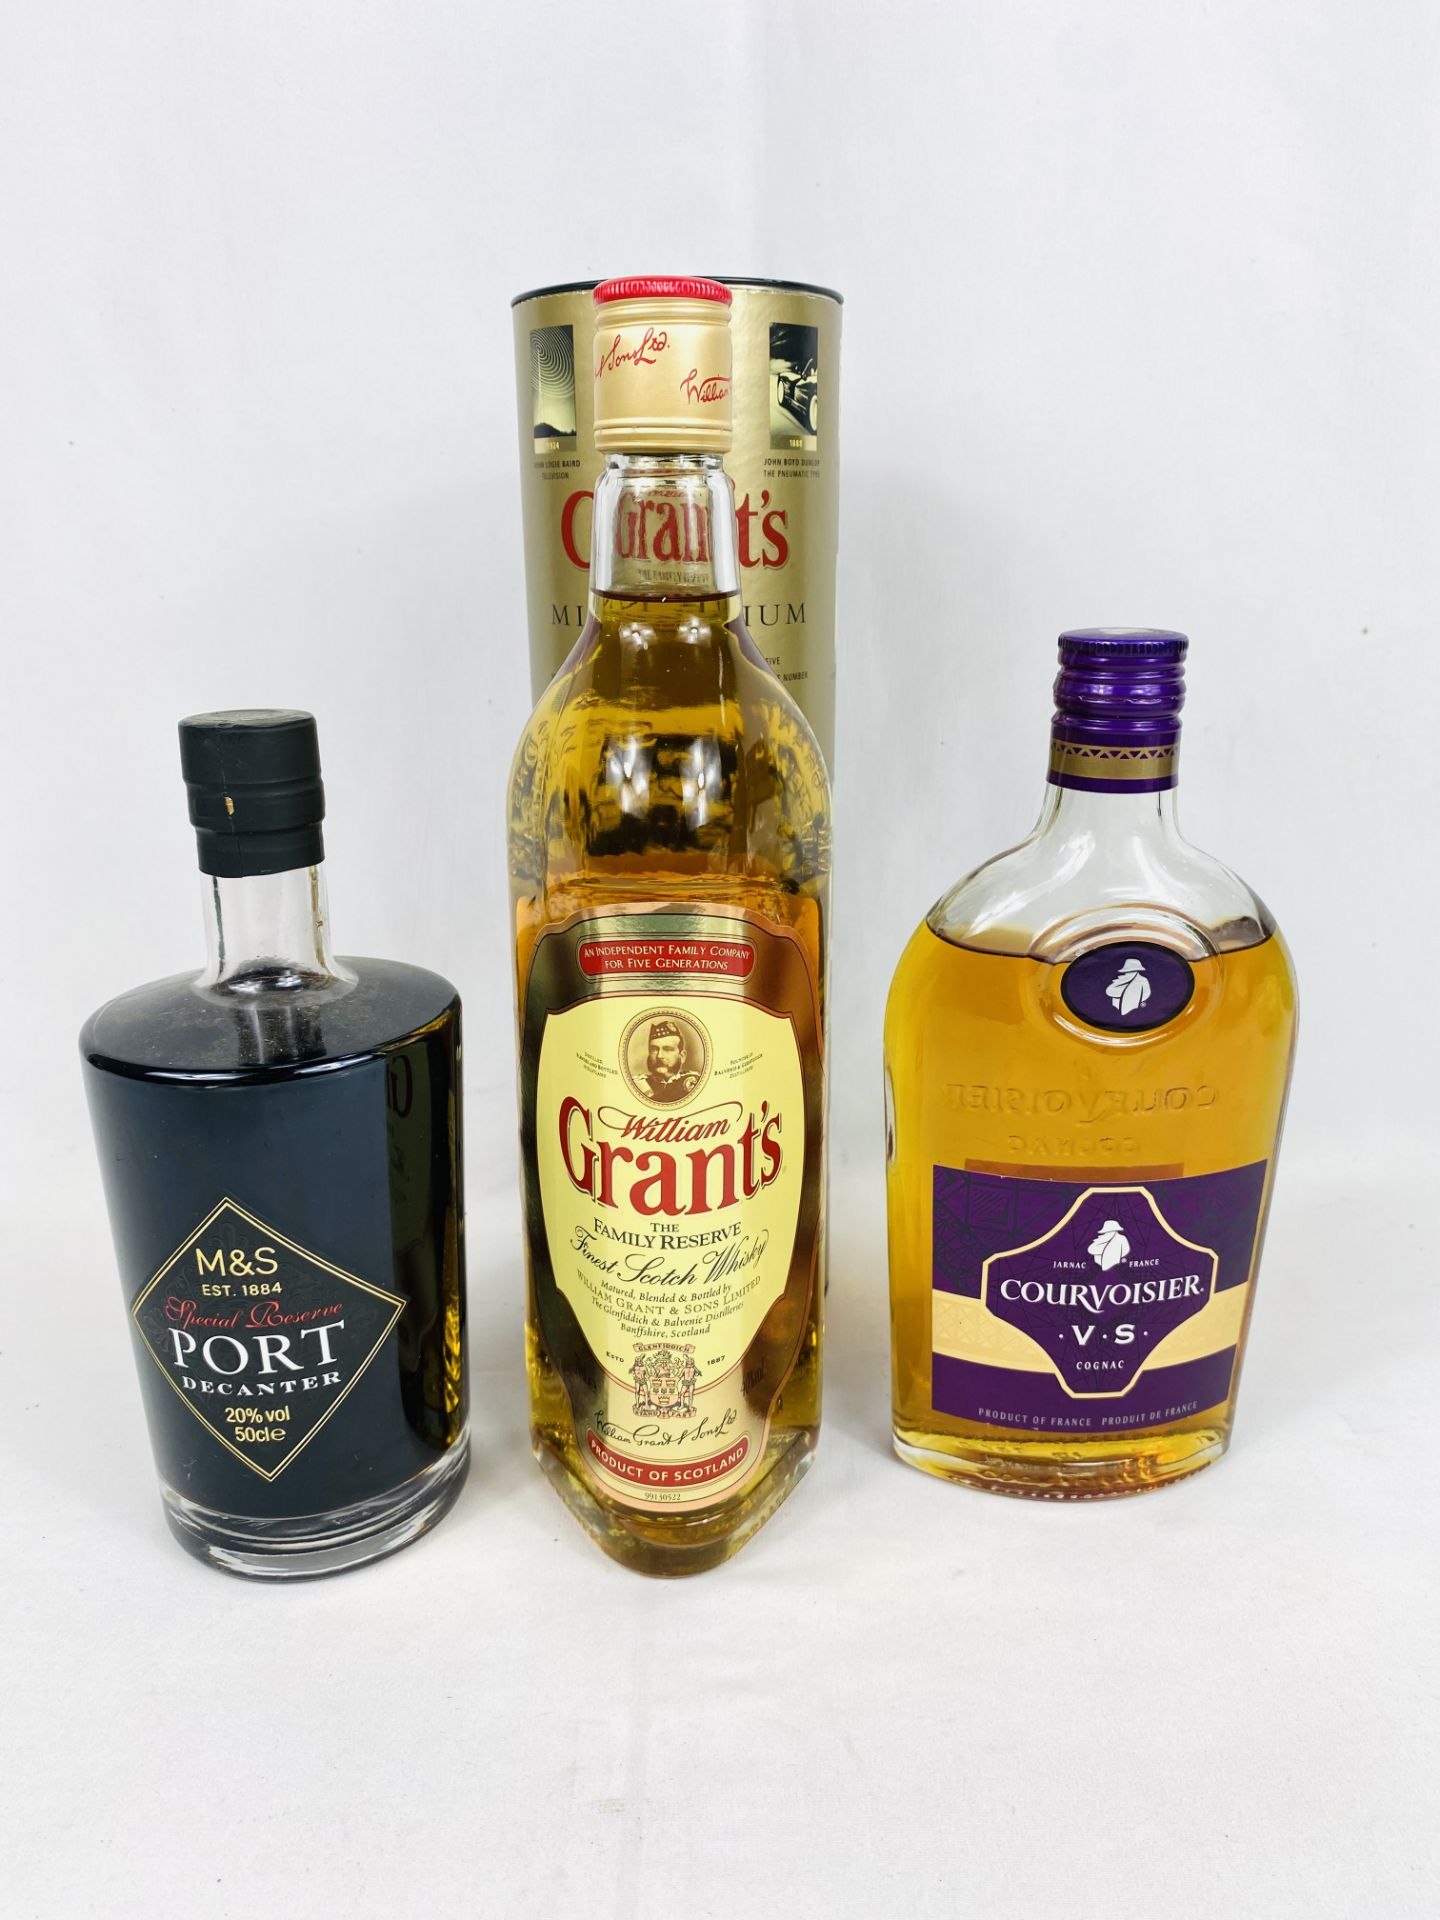 Bottle of Grant's Scotch whisky, bottle of Courvoisier brandy and a bottle of port